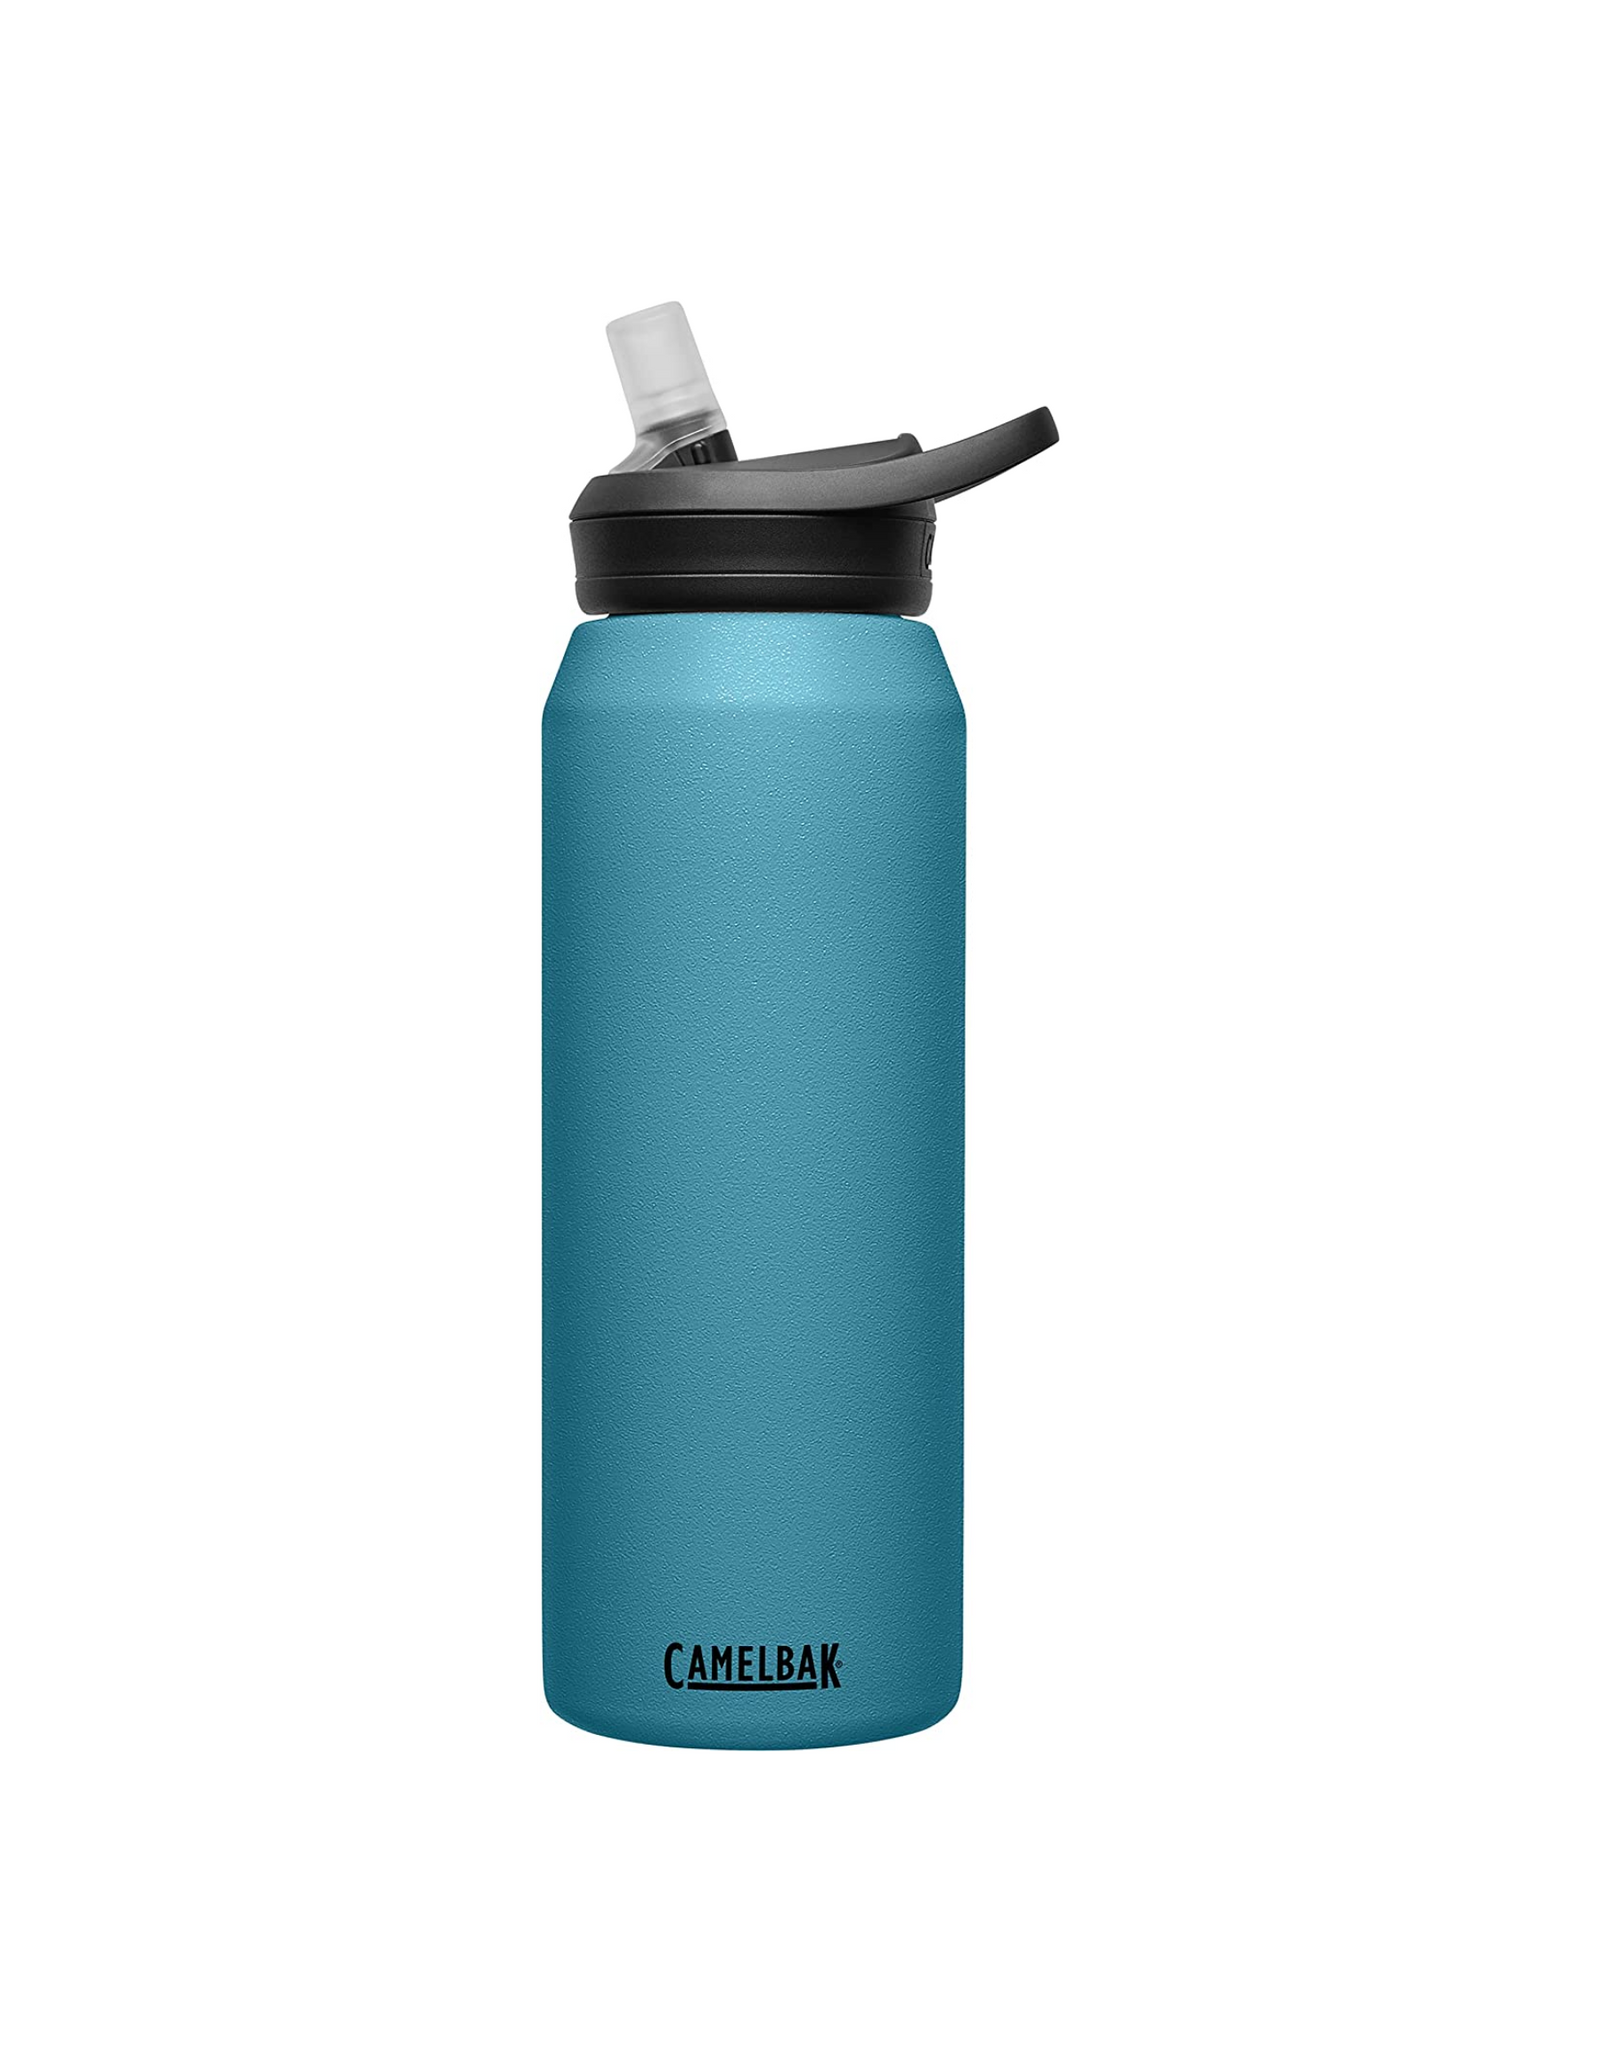 CamelBak Eddy+ Vacuum Insulated Water Bottle, Stainless Steel, 32 oz, Larkspur